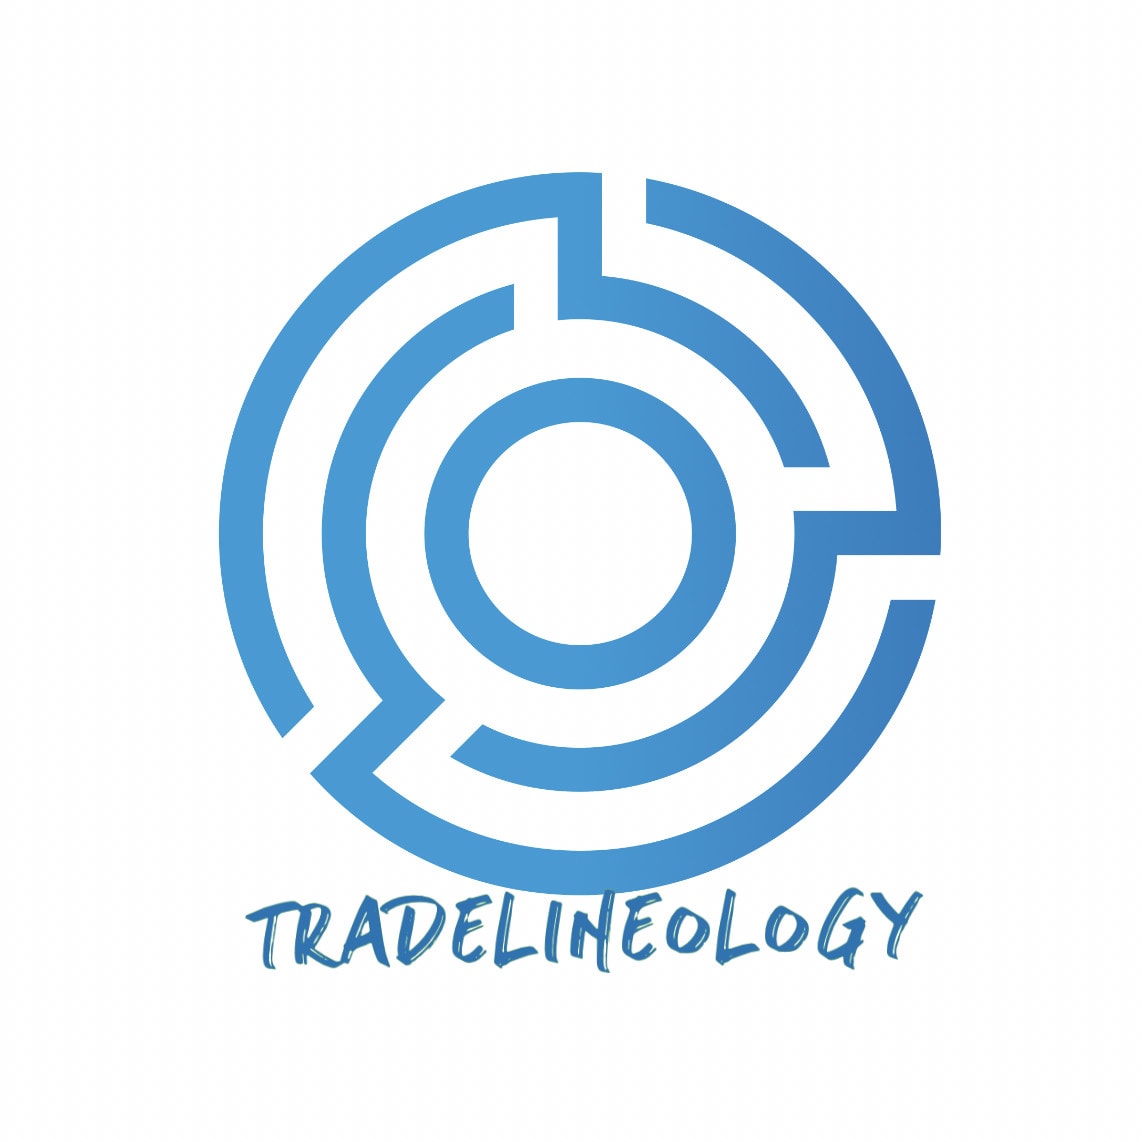 Tradelineology